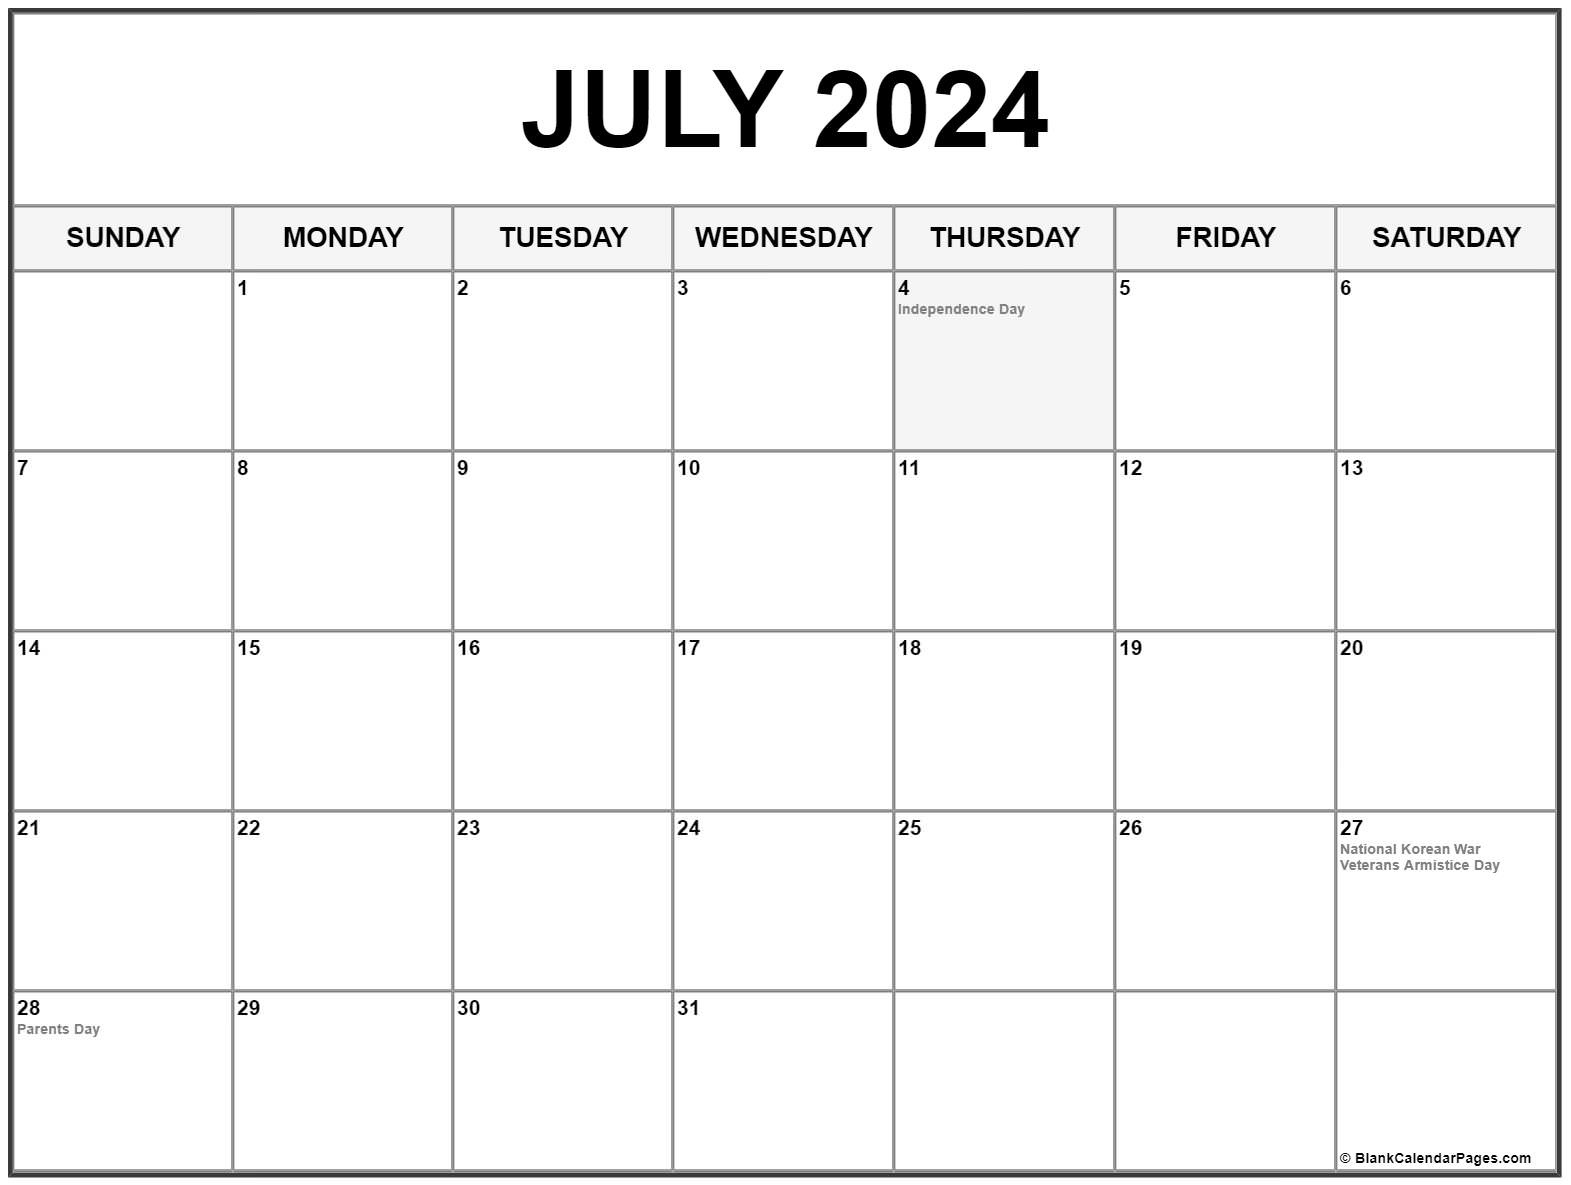 July 2024 With Holidays Calendar regarding July 16th Holiday Calendar 2024